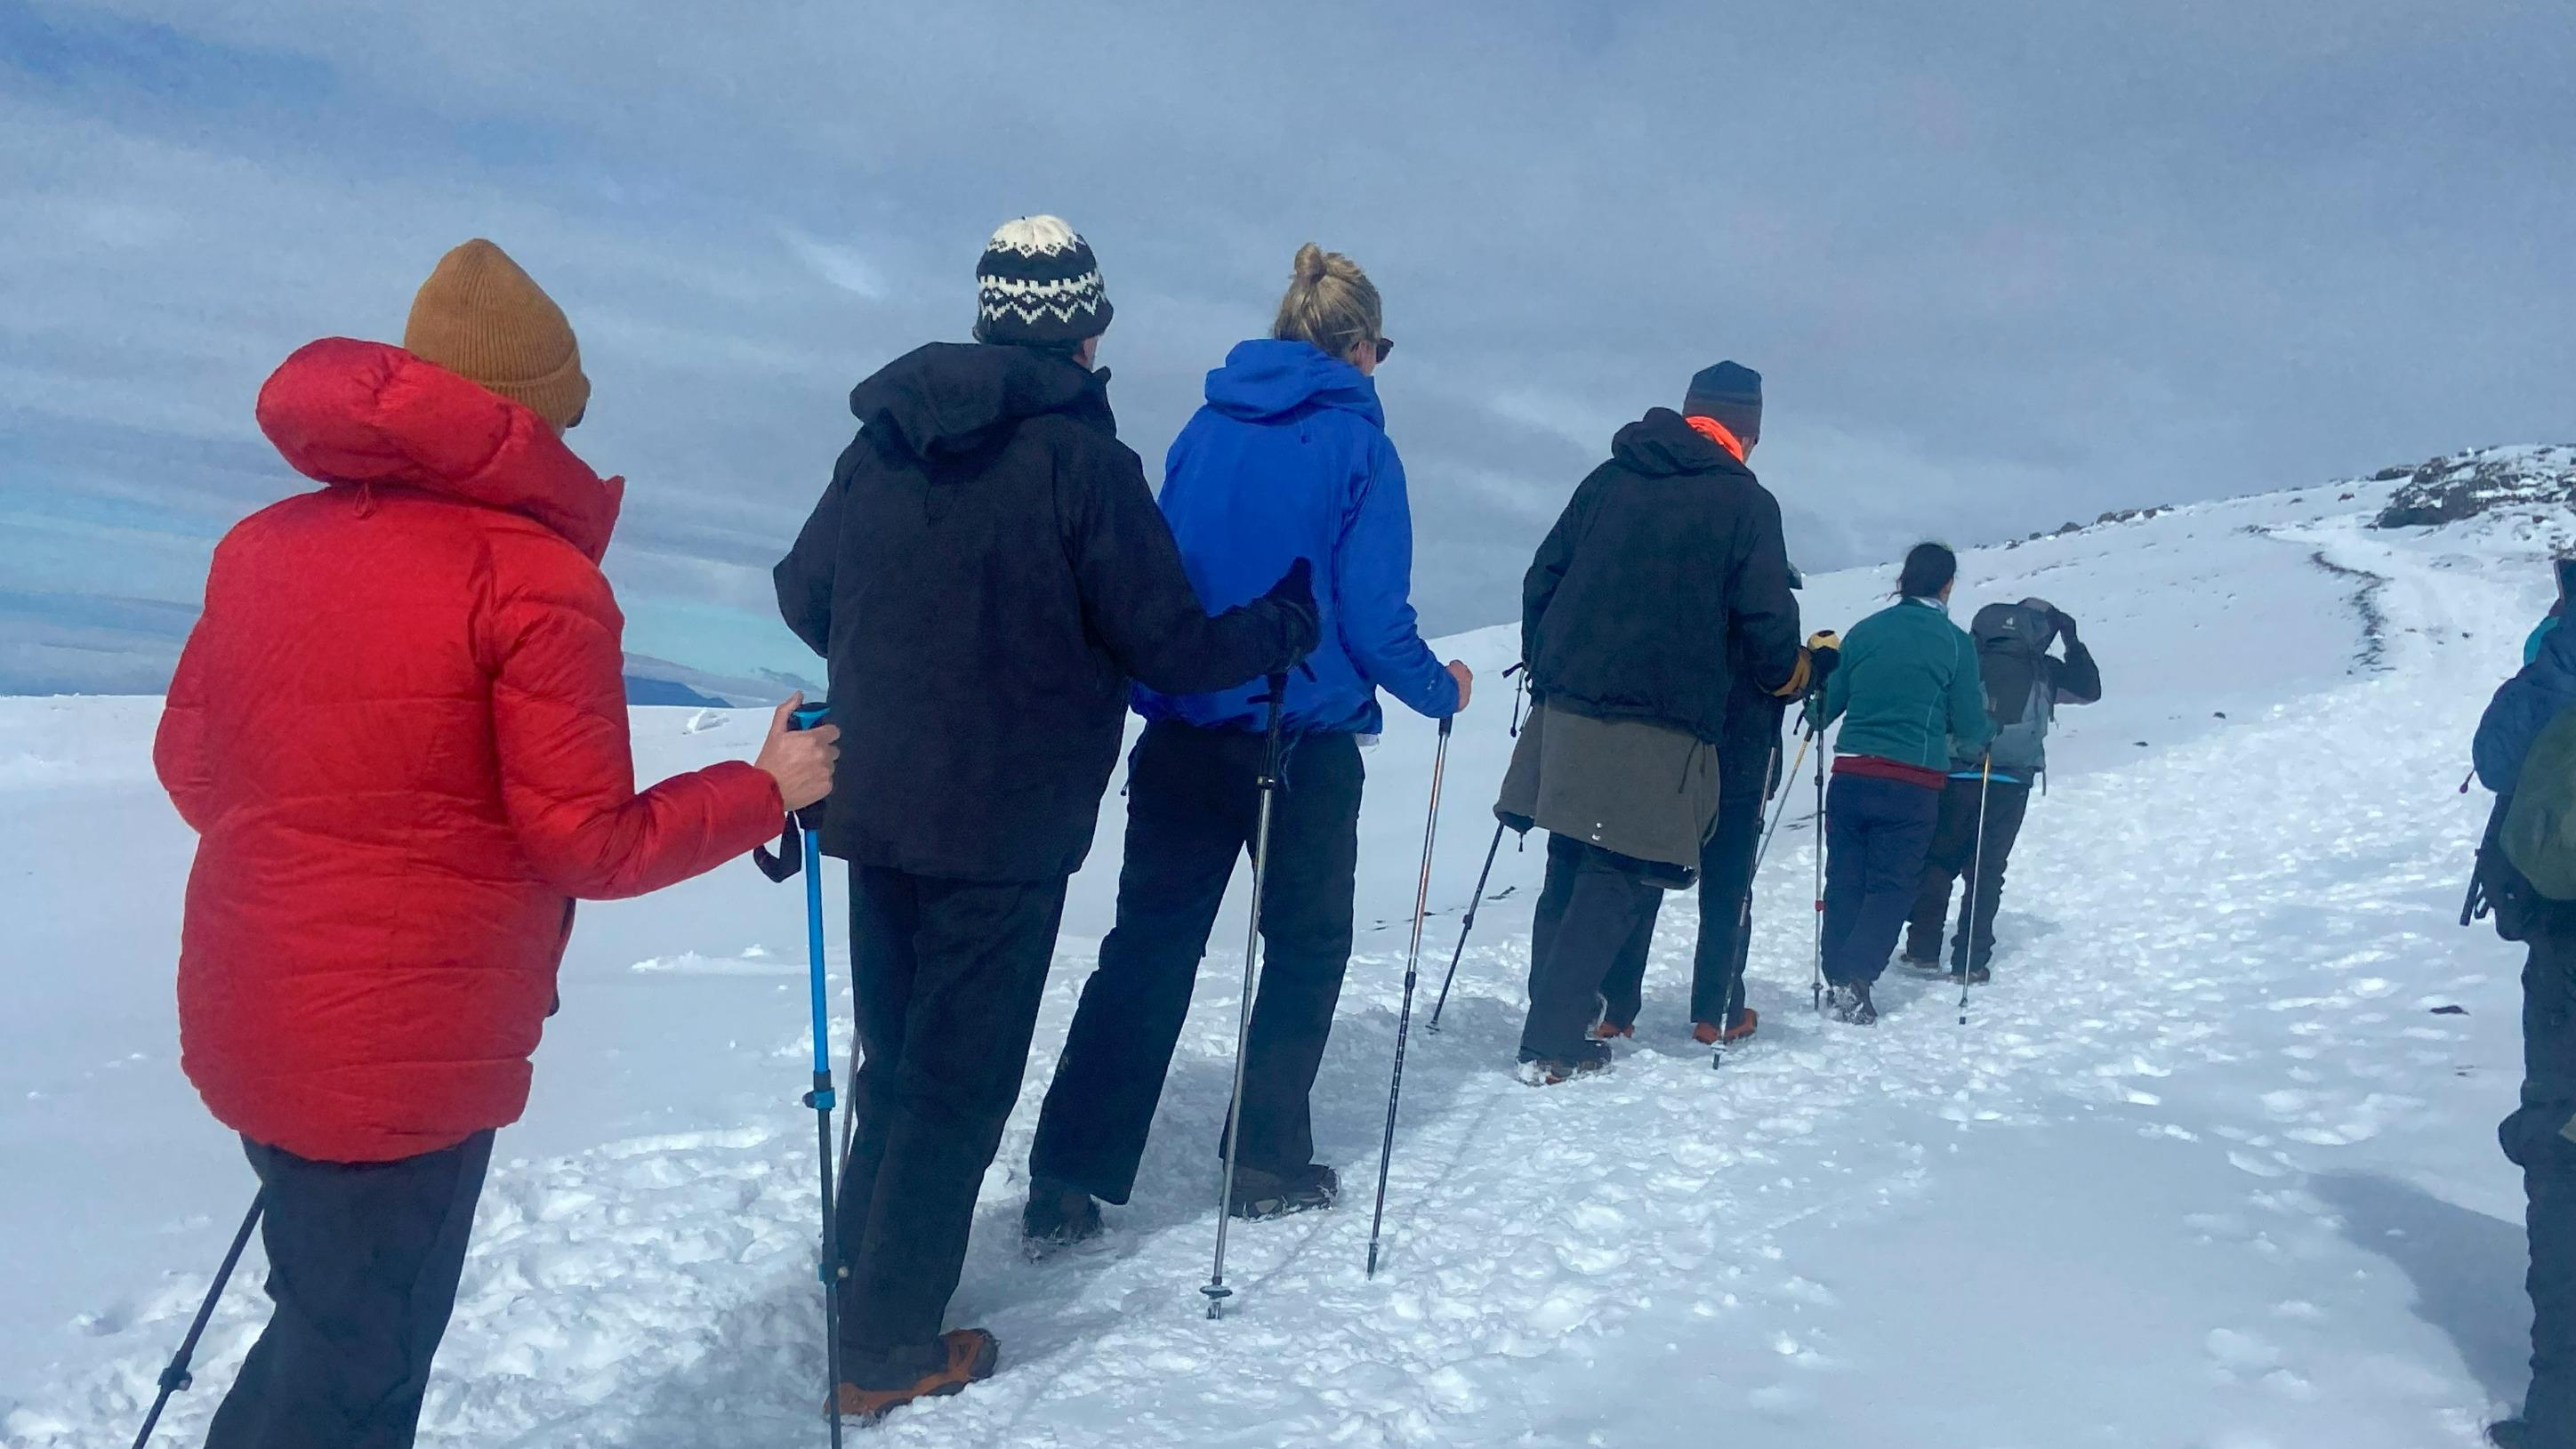 Kilimanjaro Machame route: 6-day program